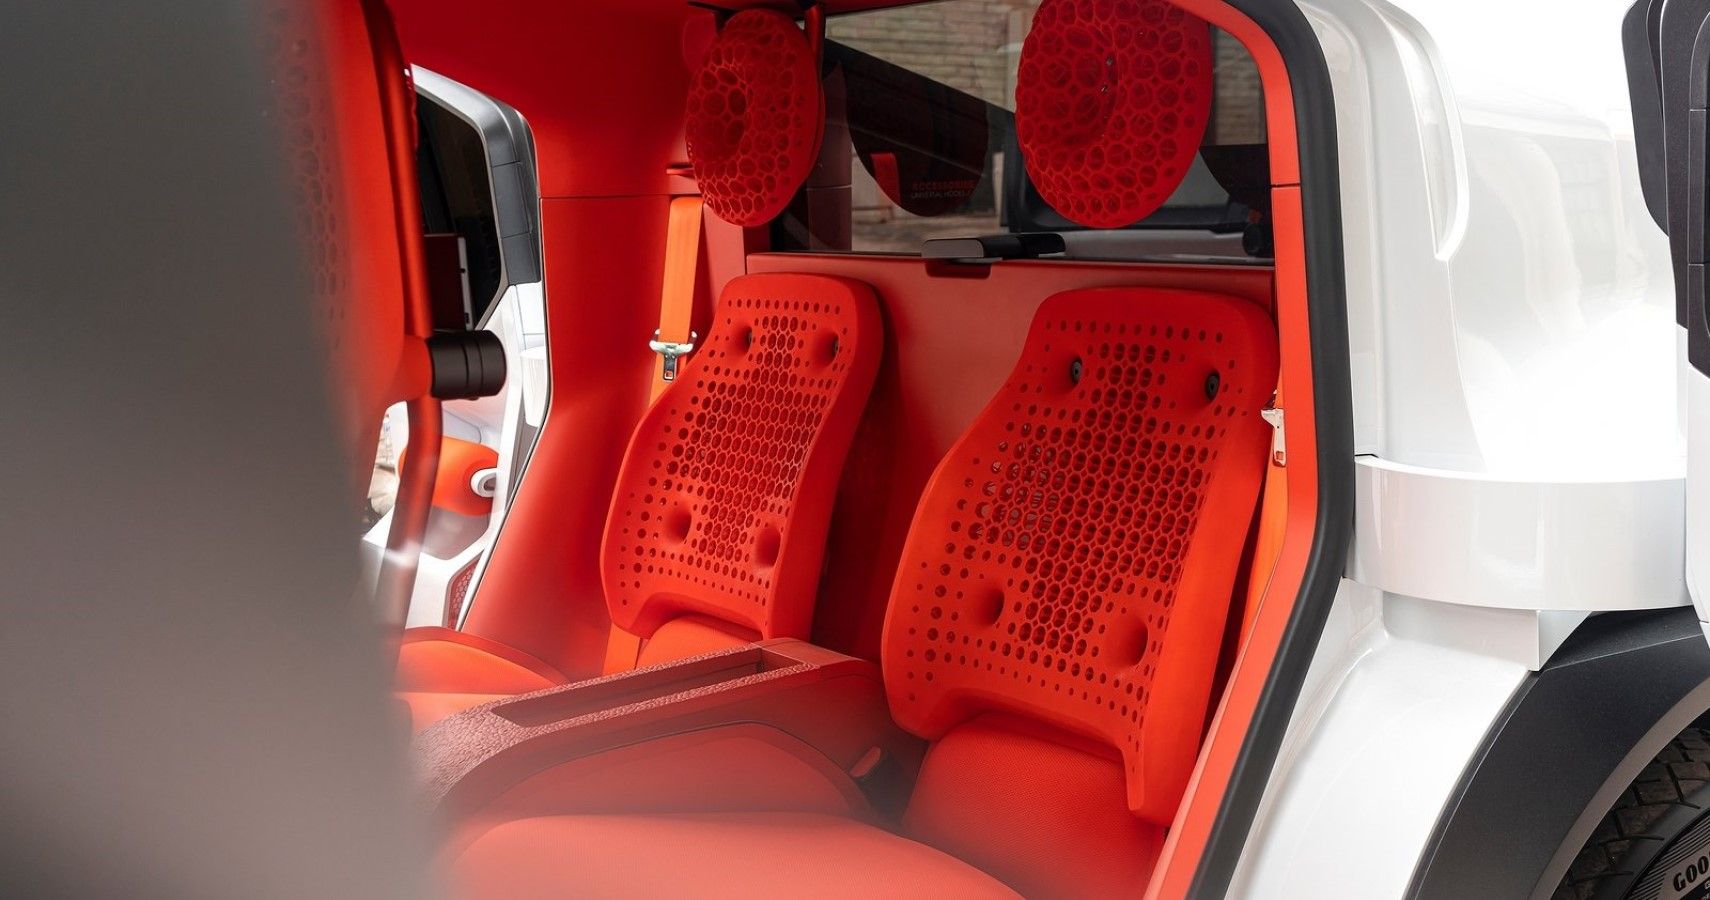 Citroën Oli Concept second row seats close-up view